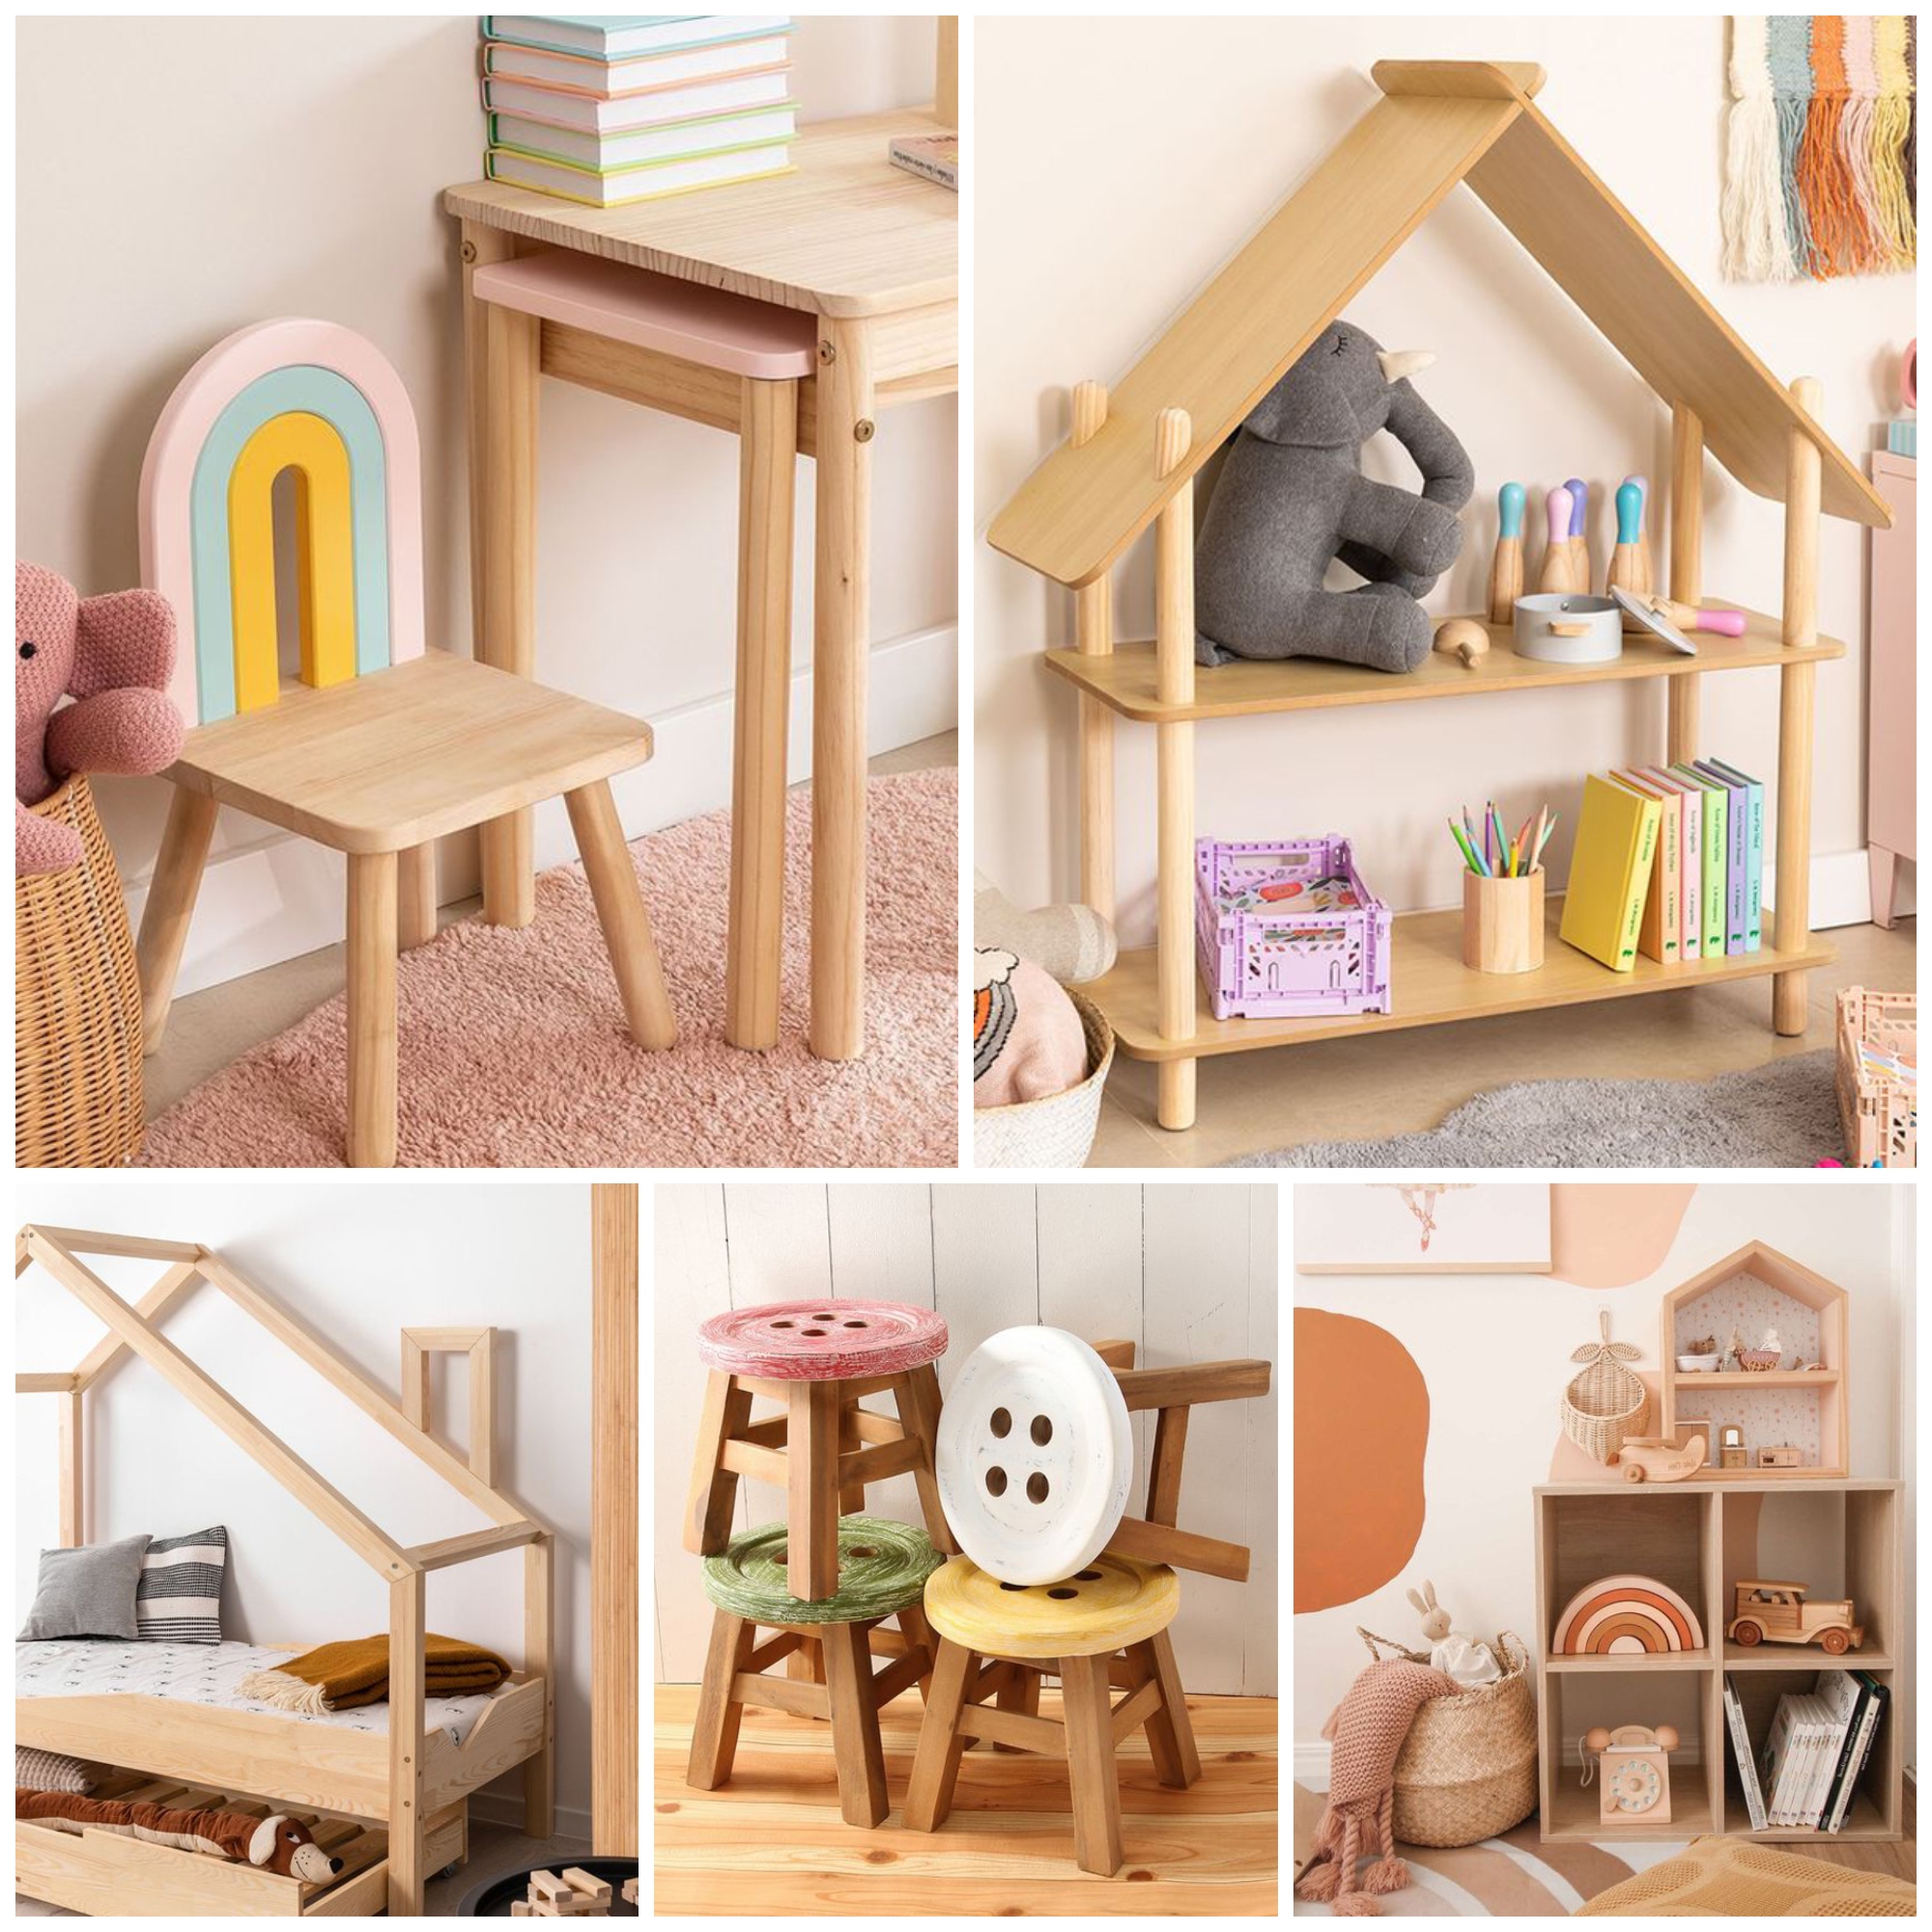 7 Minimalist Wooden Furniture Ideas For Kids Room